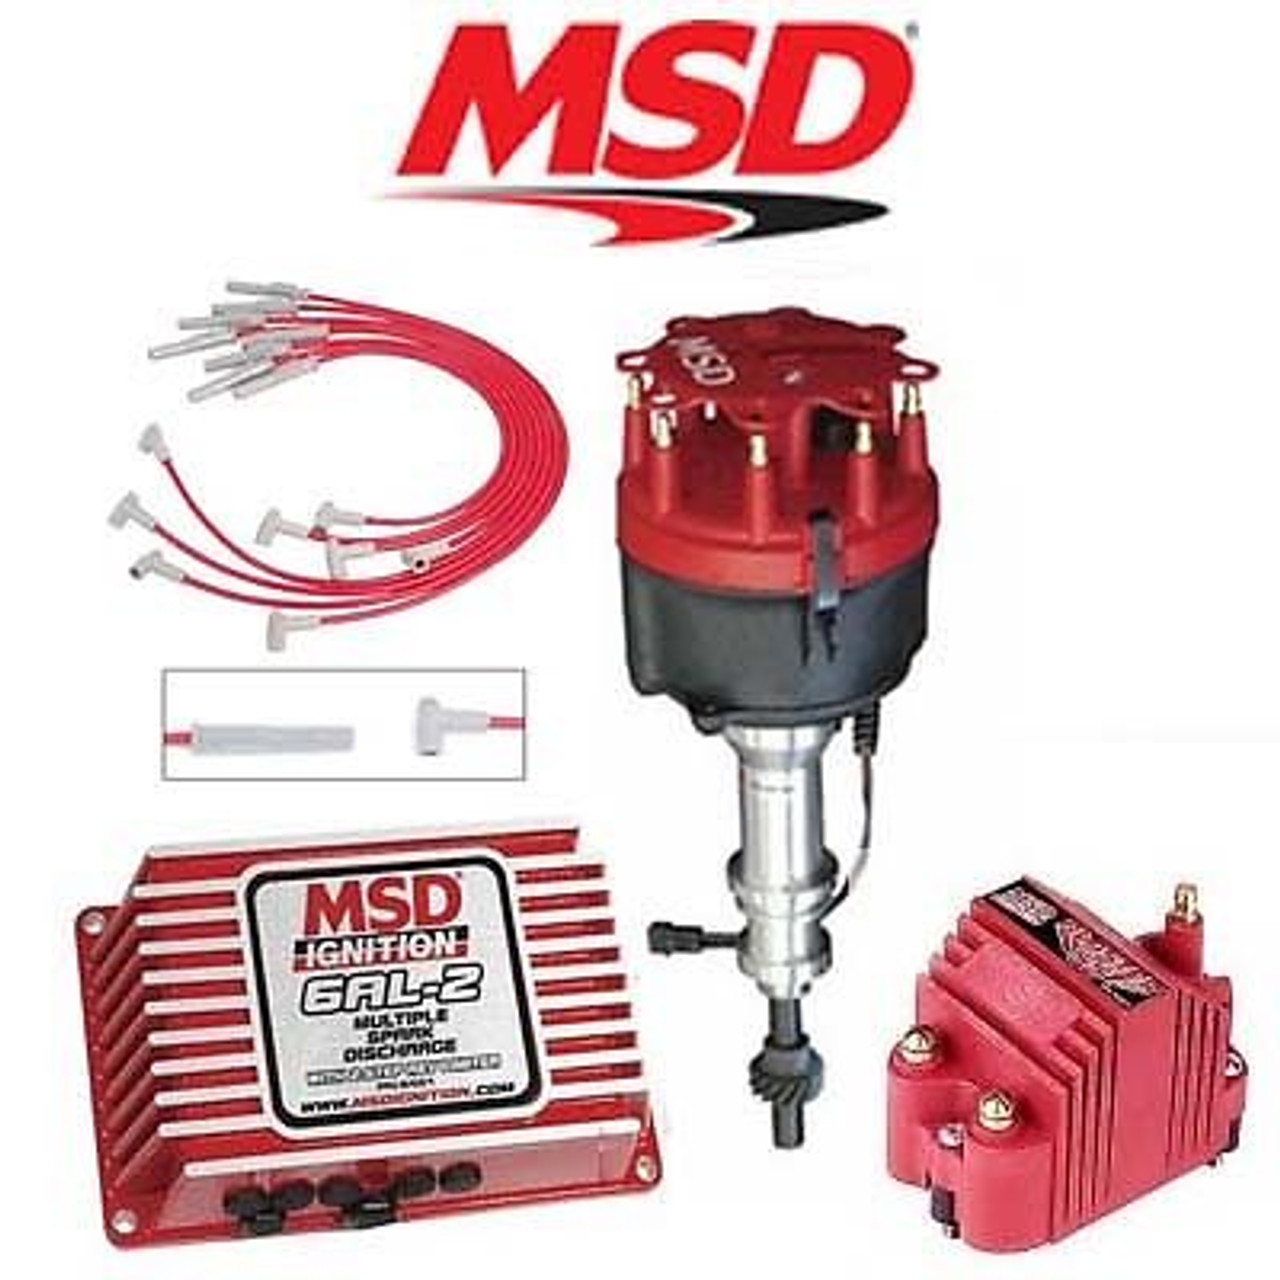 MSD 9165 Ignition Kit - Digital 6AL-2/Distributor/Wires/Blaster Coil - Ford 351W